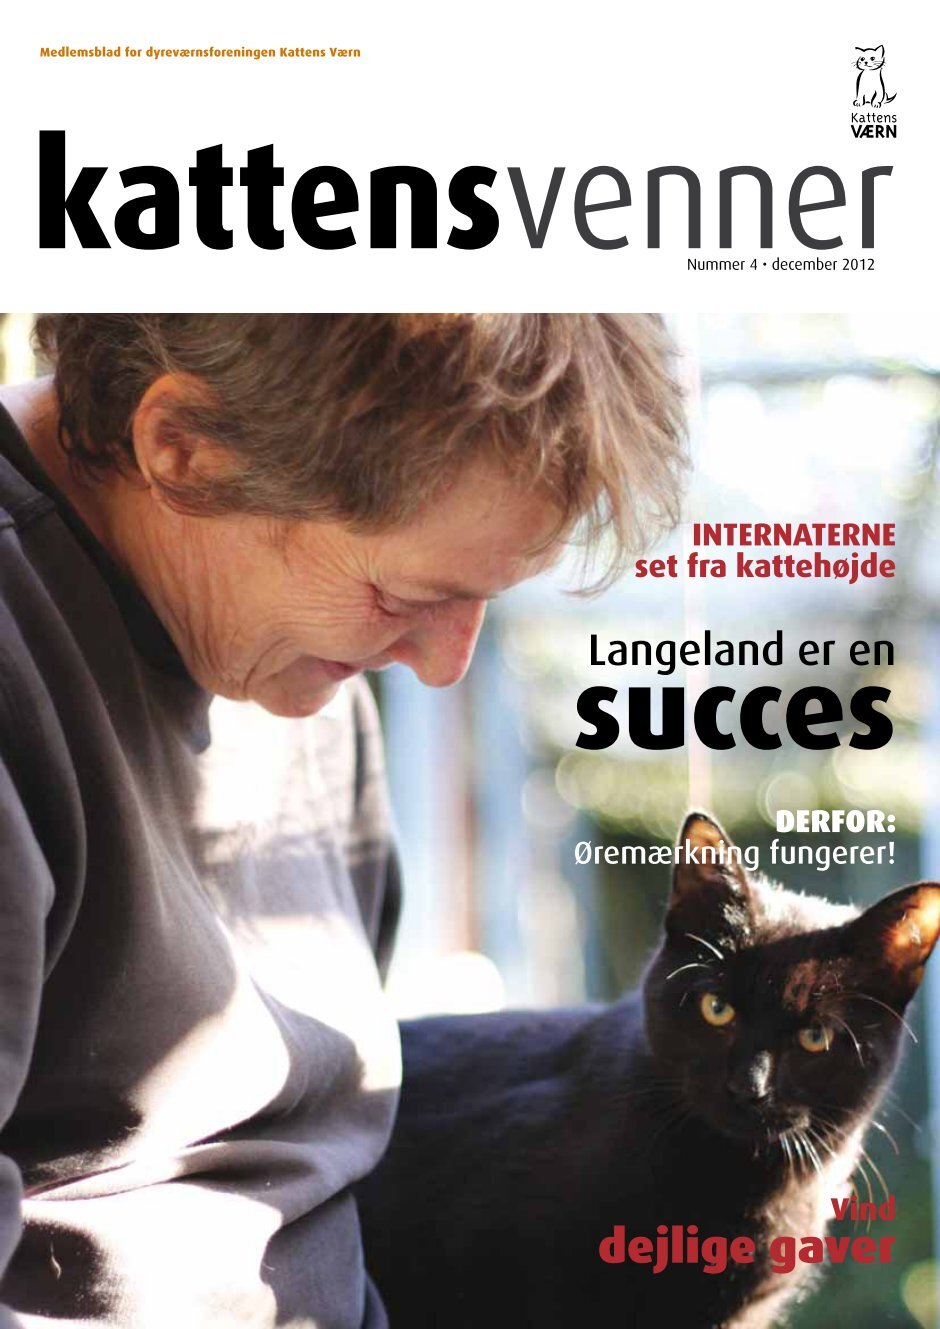 30 free Magazines from KATTENS.VAERN.DK